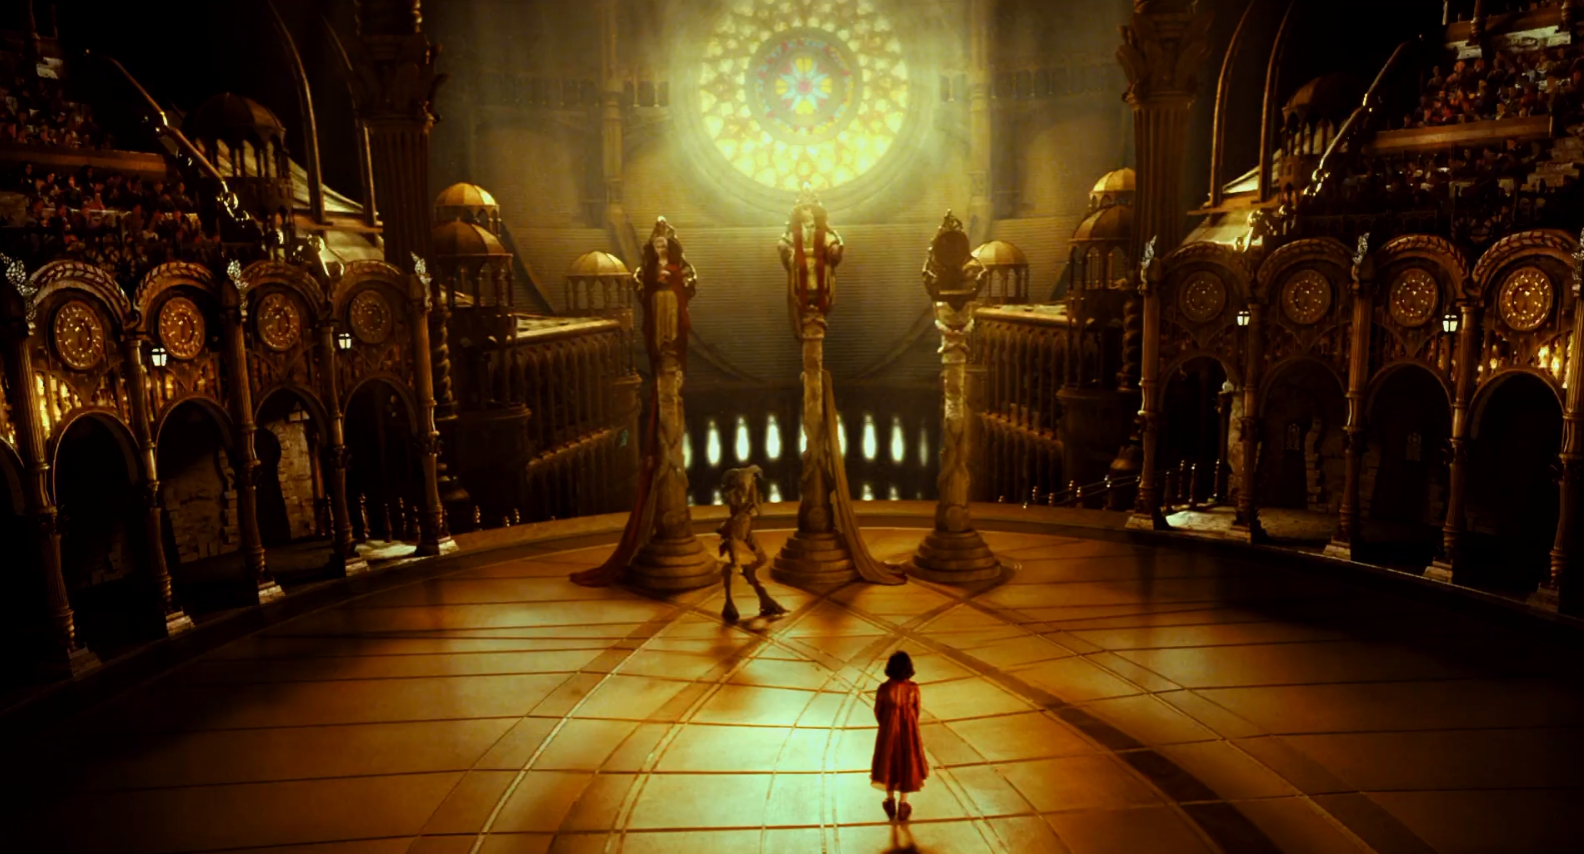 Pan’s Labyrinth (2006)